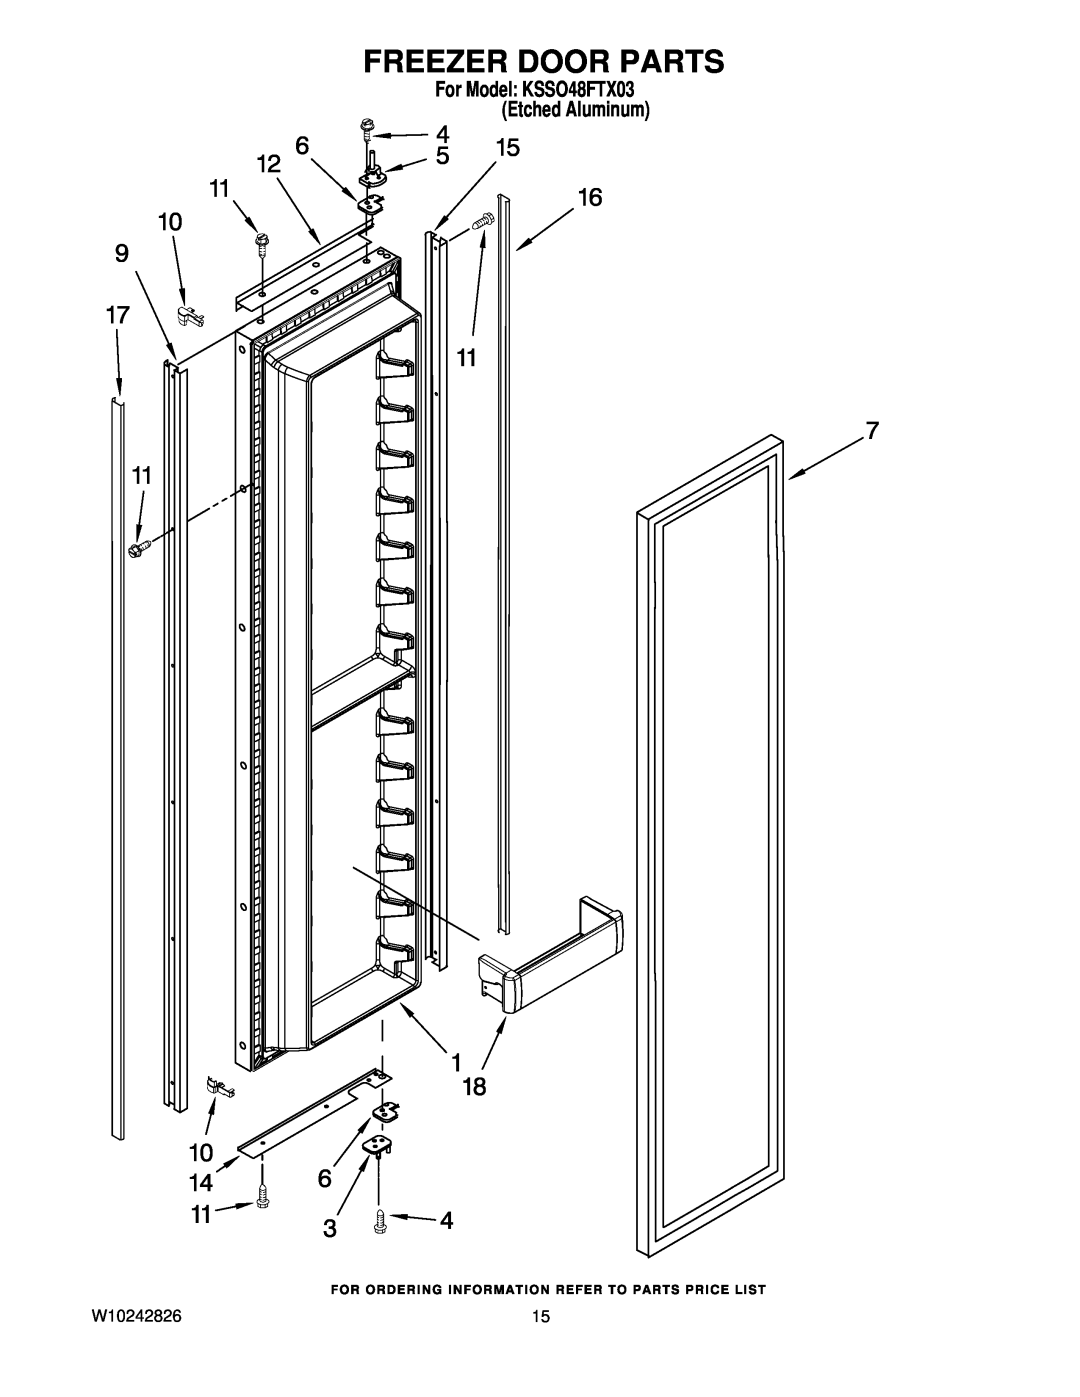 KitchenAid manual Freezer Door Parts, W10242826, For Model KSSO48FTX03 Etched Aluminum 